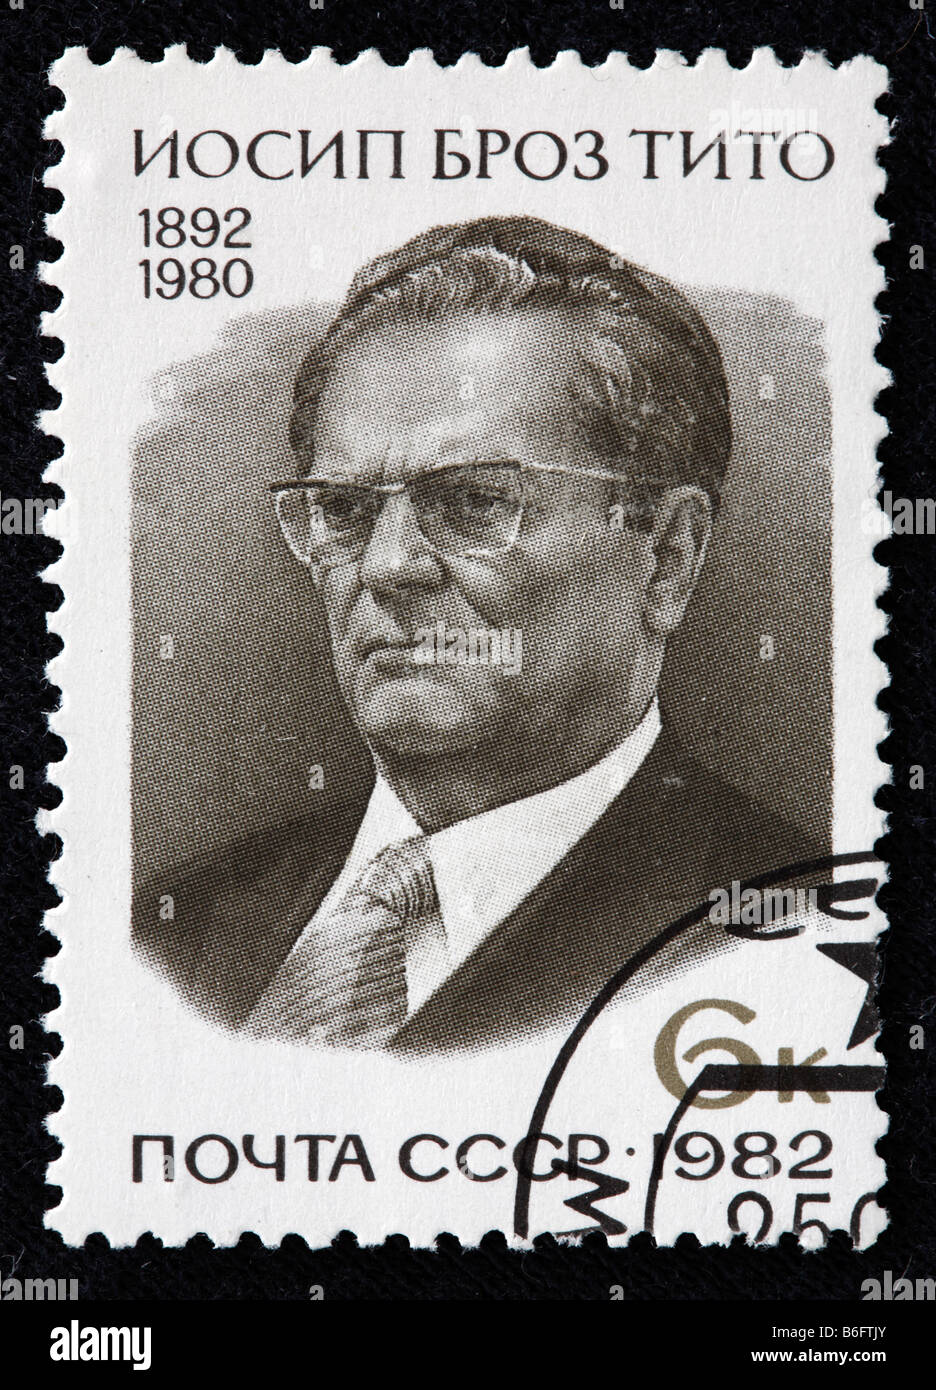 Josip Broz Tito, President of the Socialist Federal Republic of Yugoslavia (1953-1980), postage stamp, Yugoslavia Stock Photo